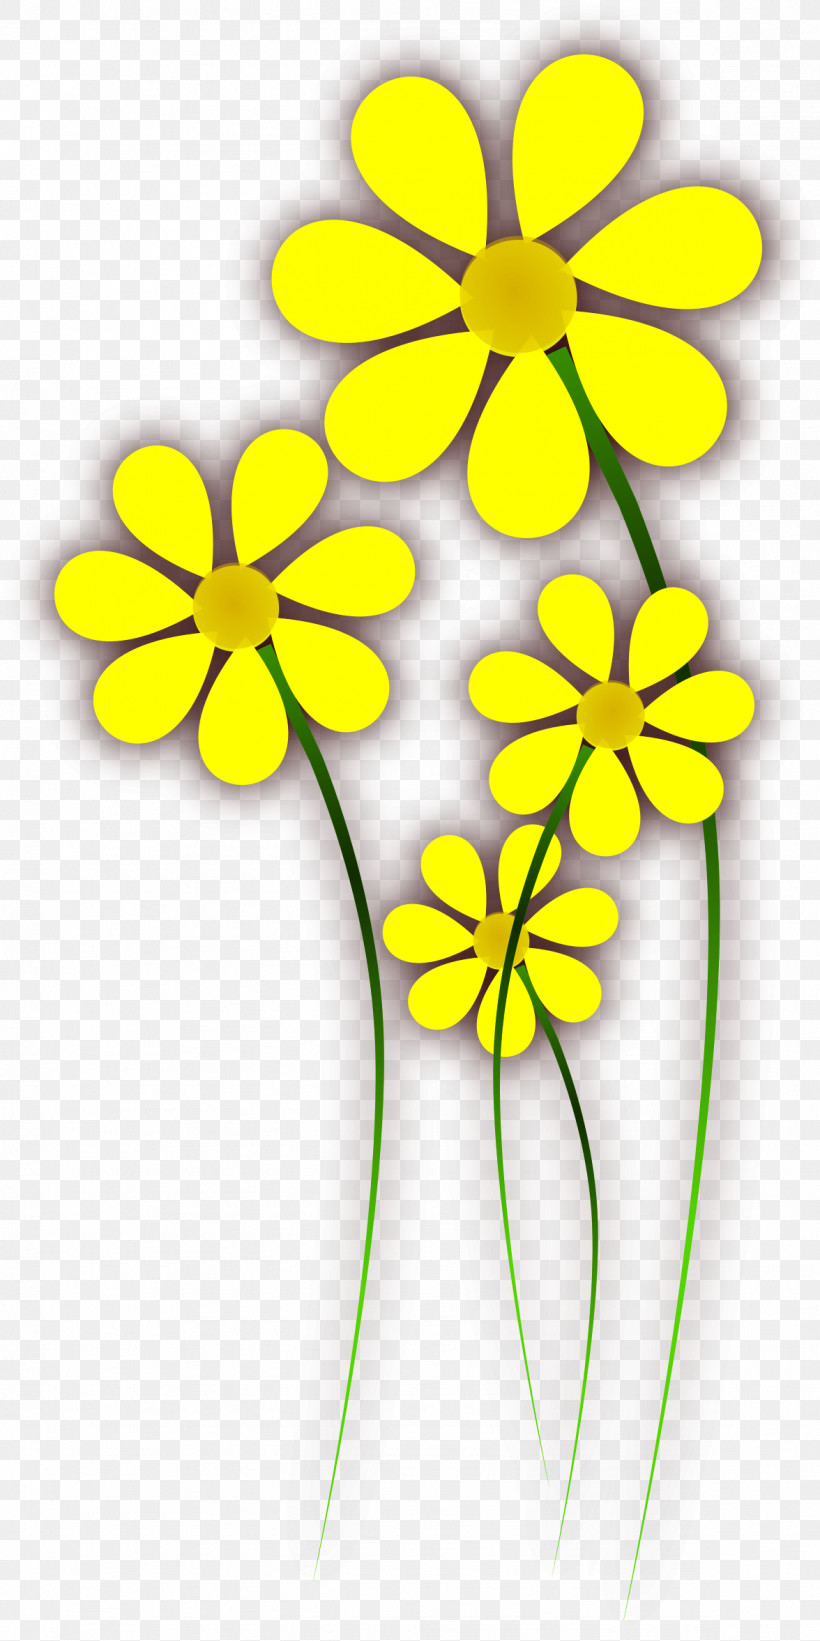 Yellow Flower Plant Petal Pedicel, PNG, 1176x2354px, Yellow, Flower, Pedicel, Petal, Plant Download Free